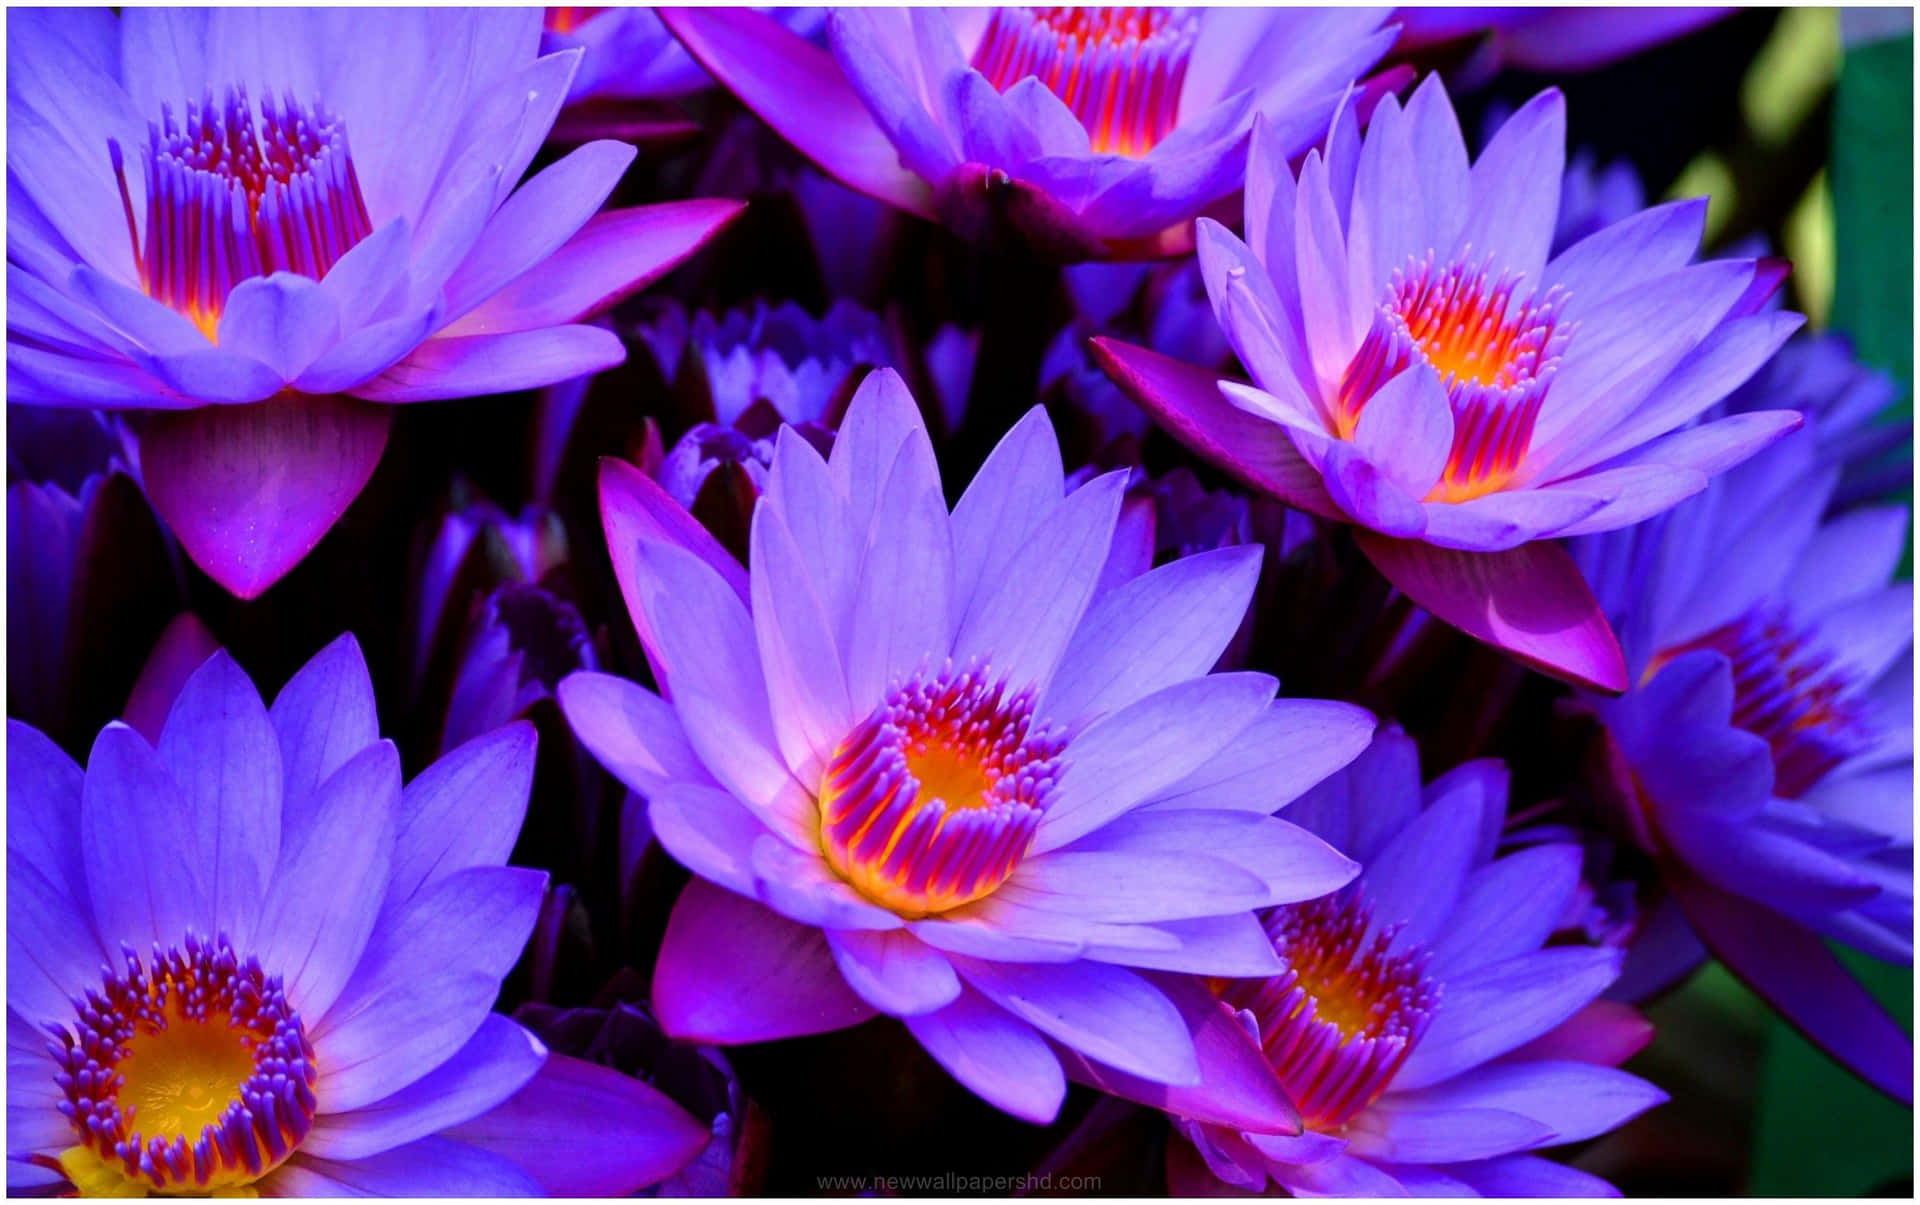 A beautiful blooming pink lotus